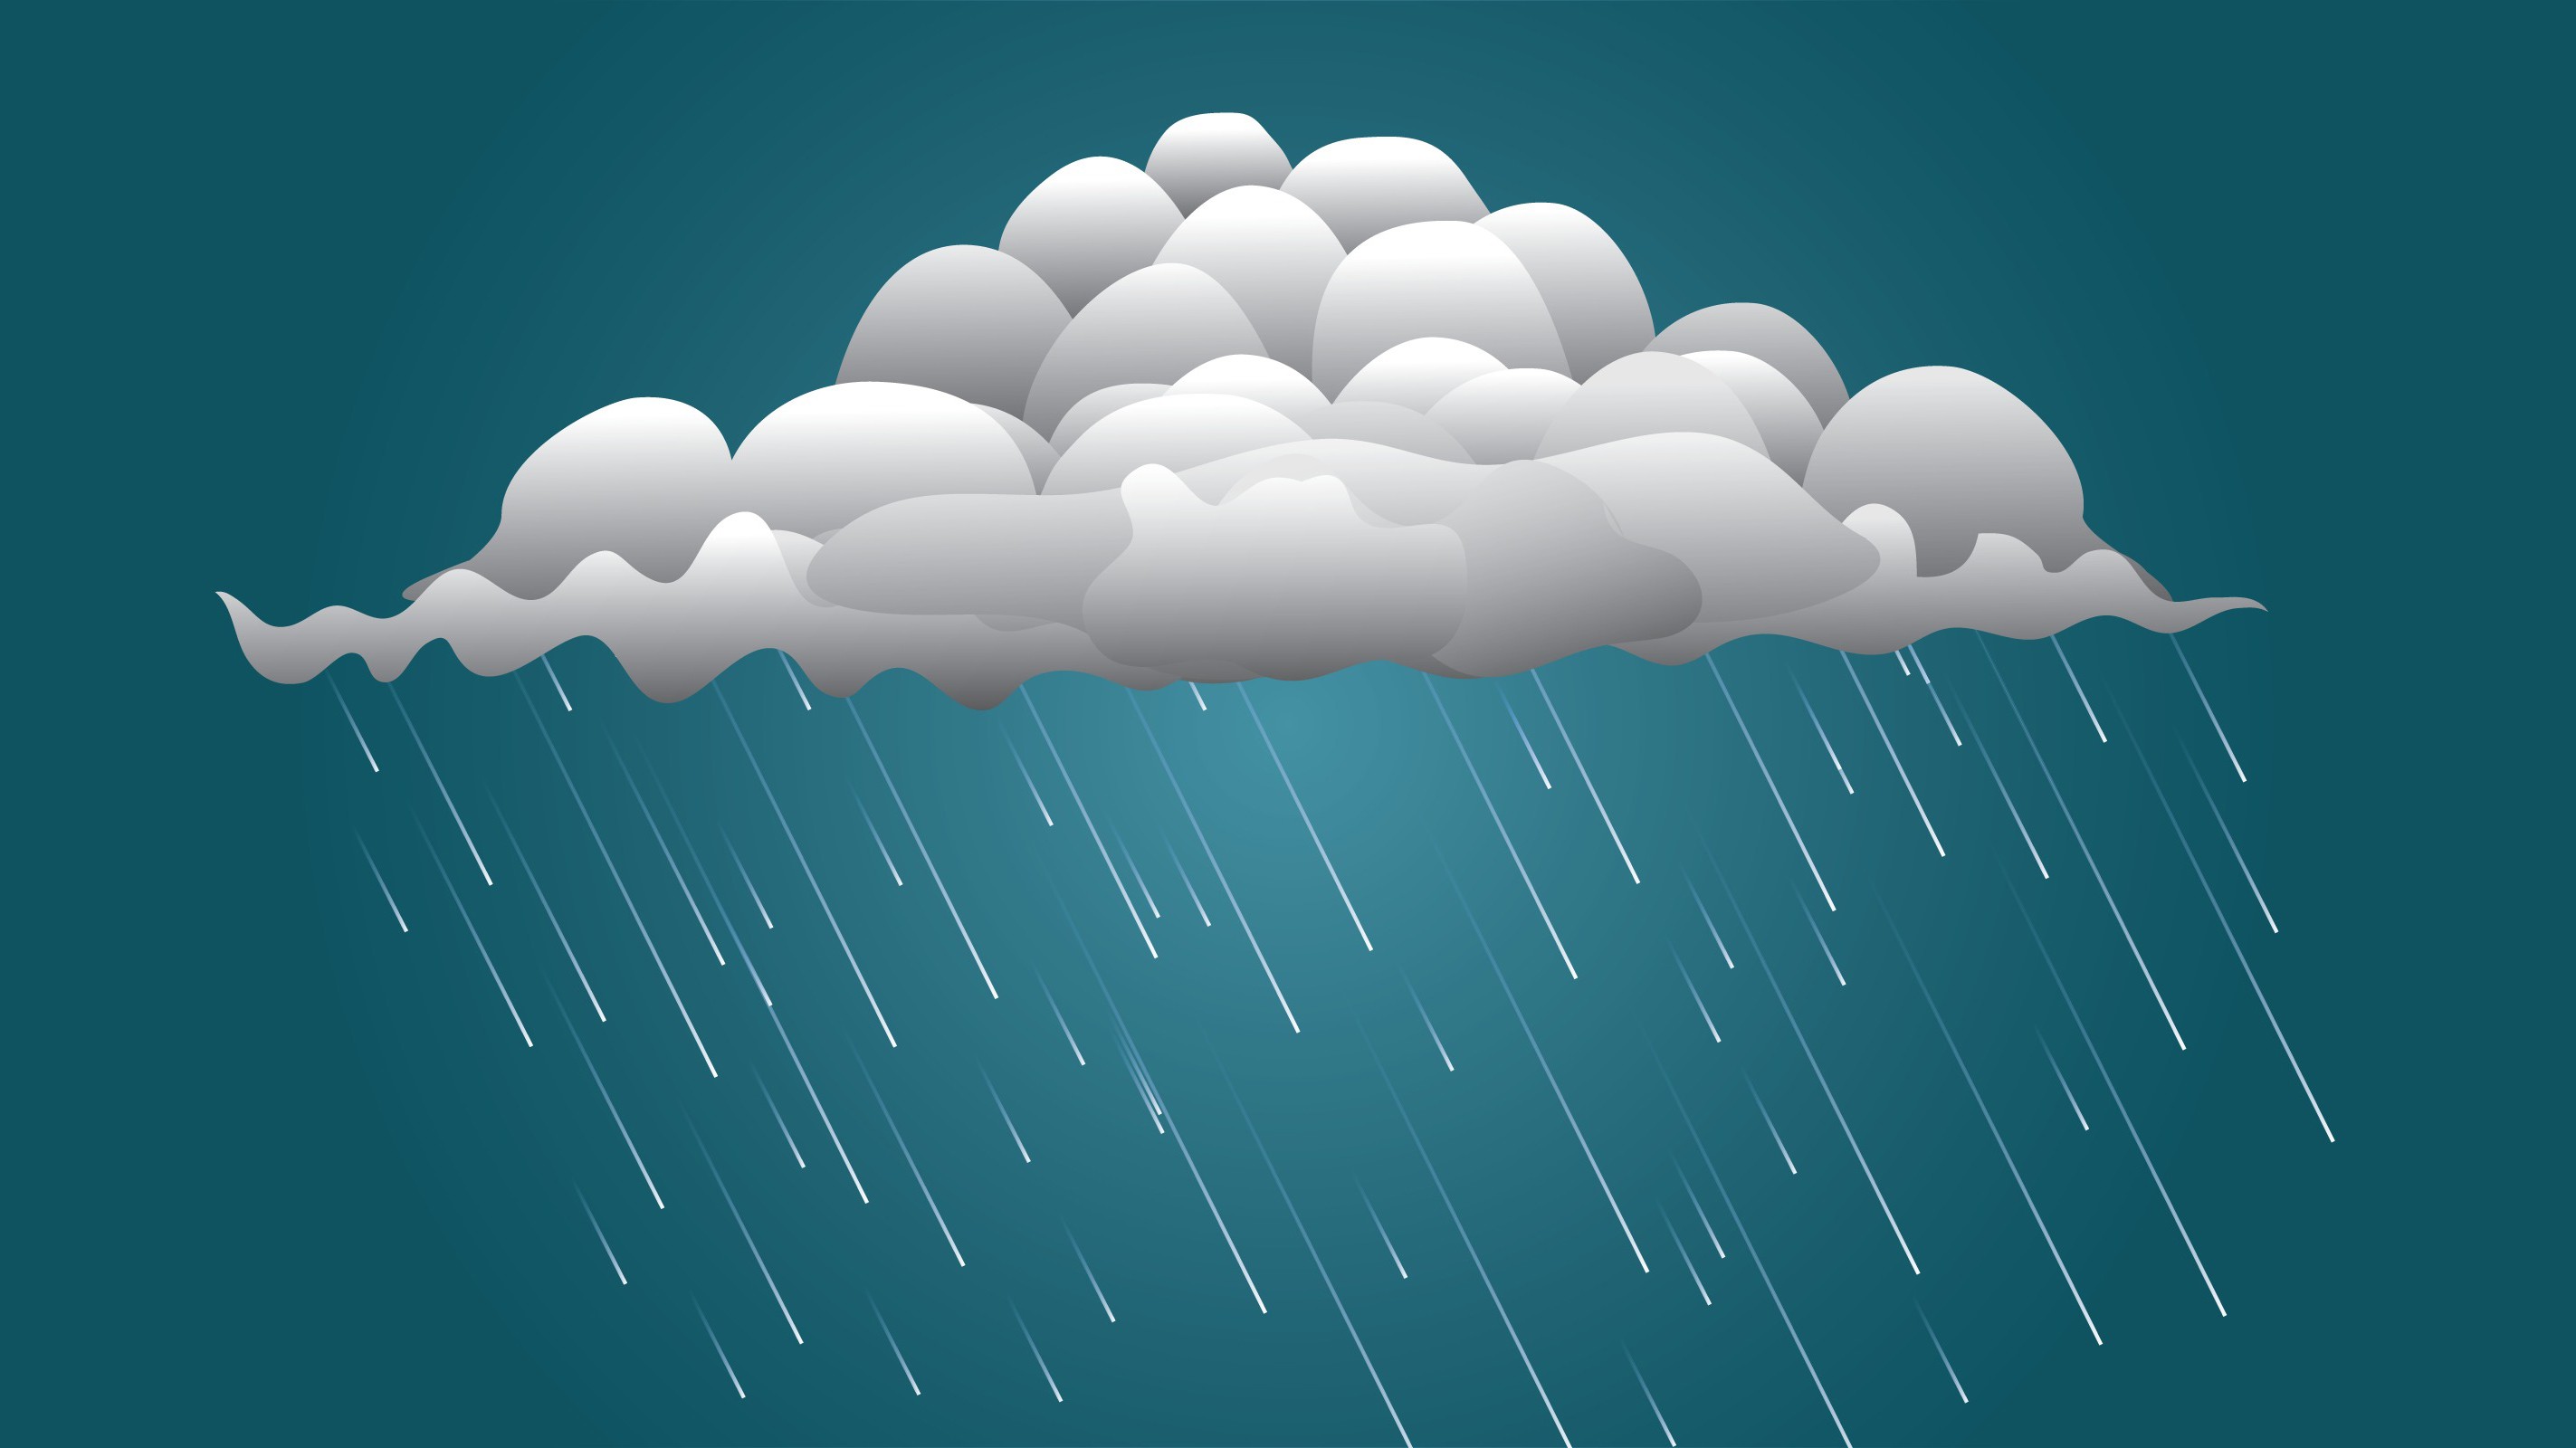 rain cloud vector background download hd picture